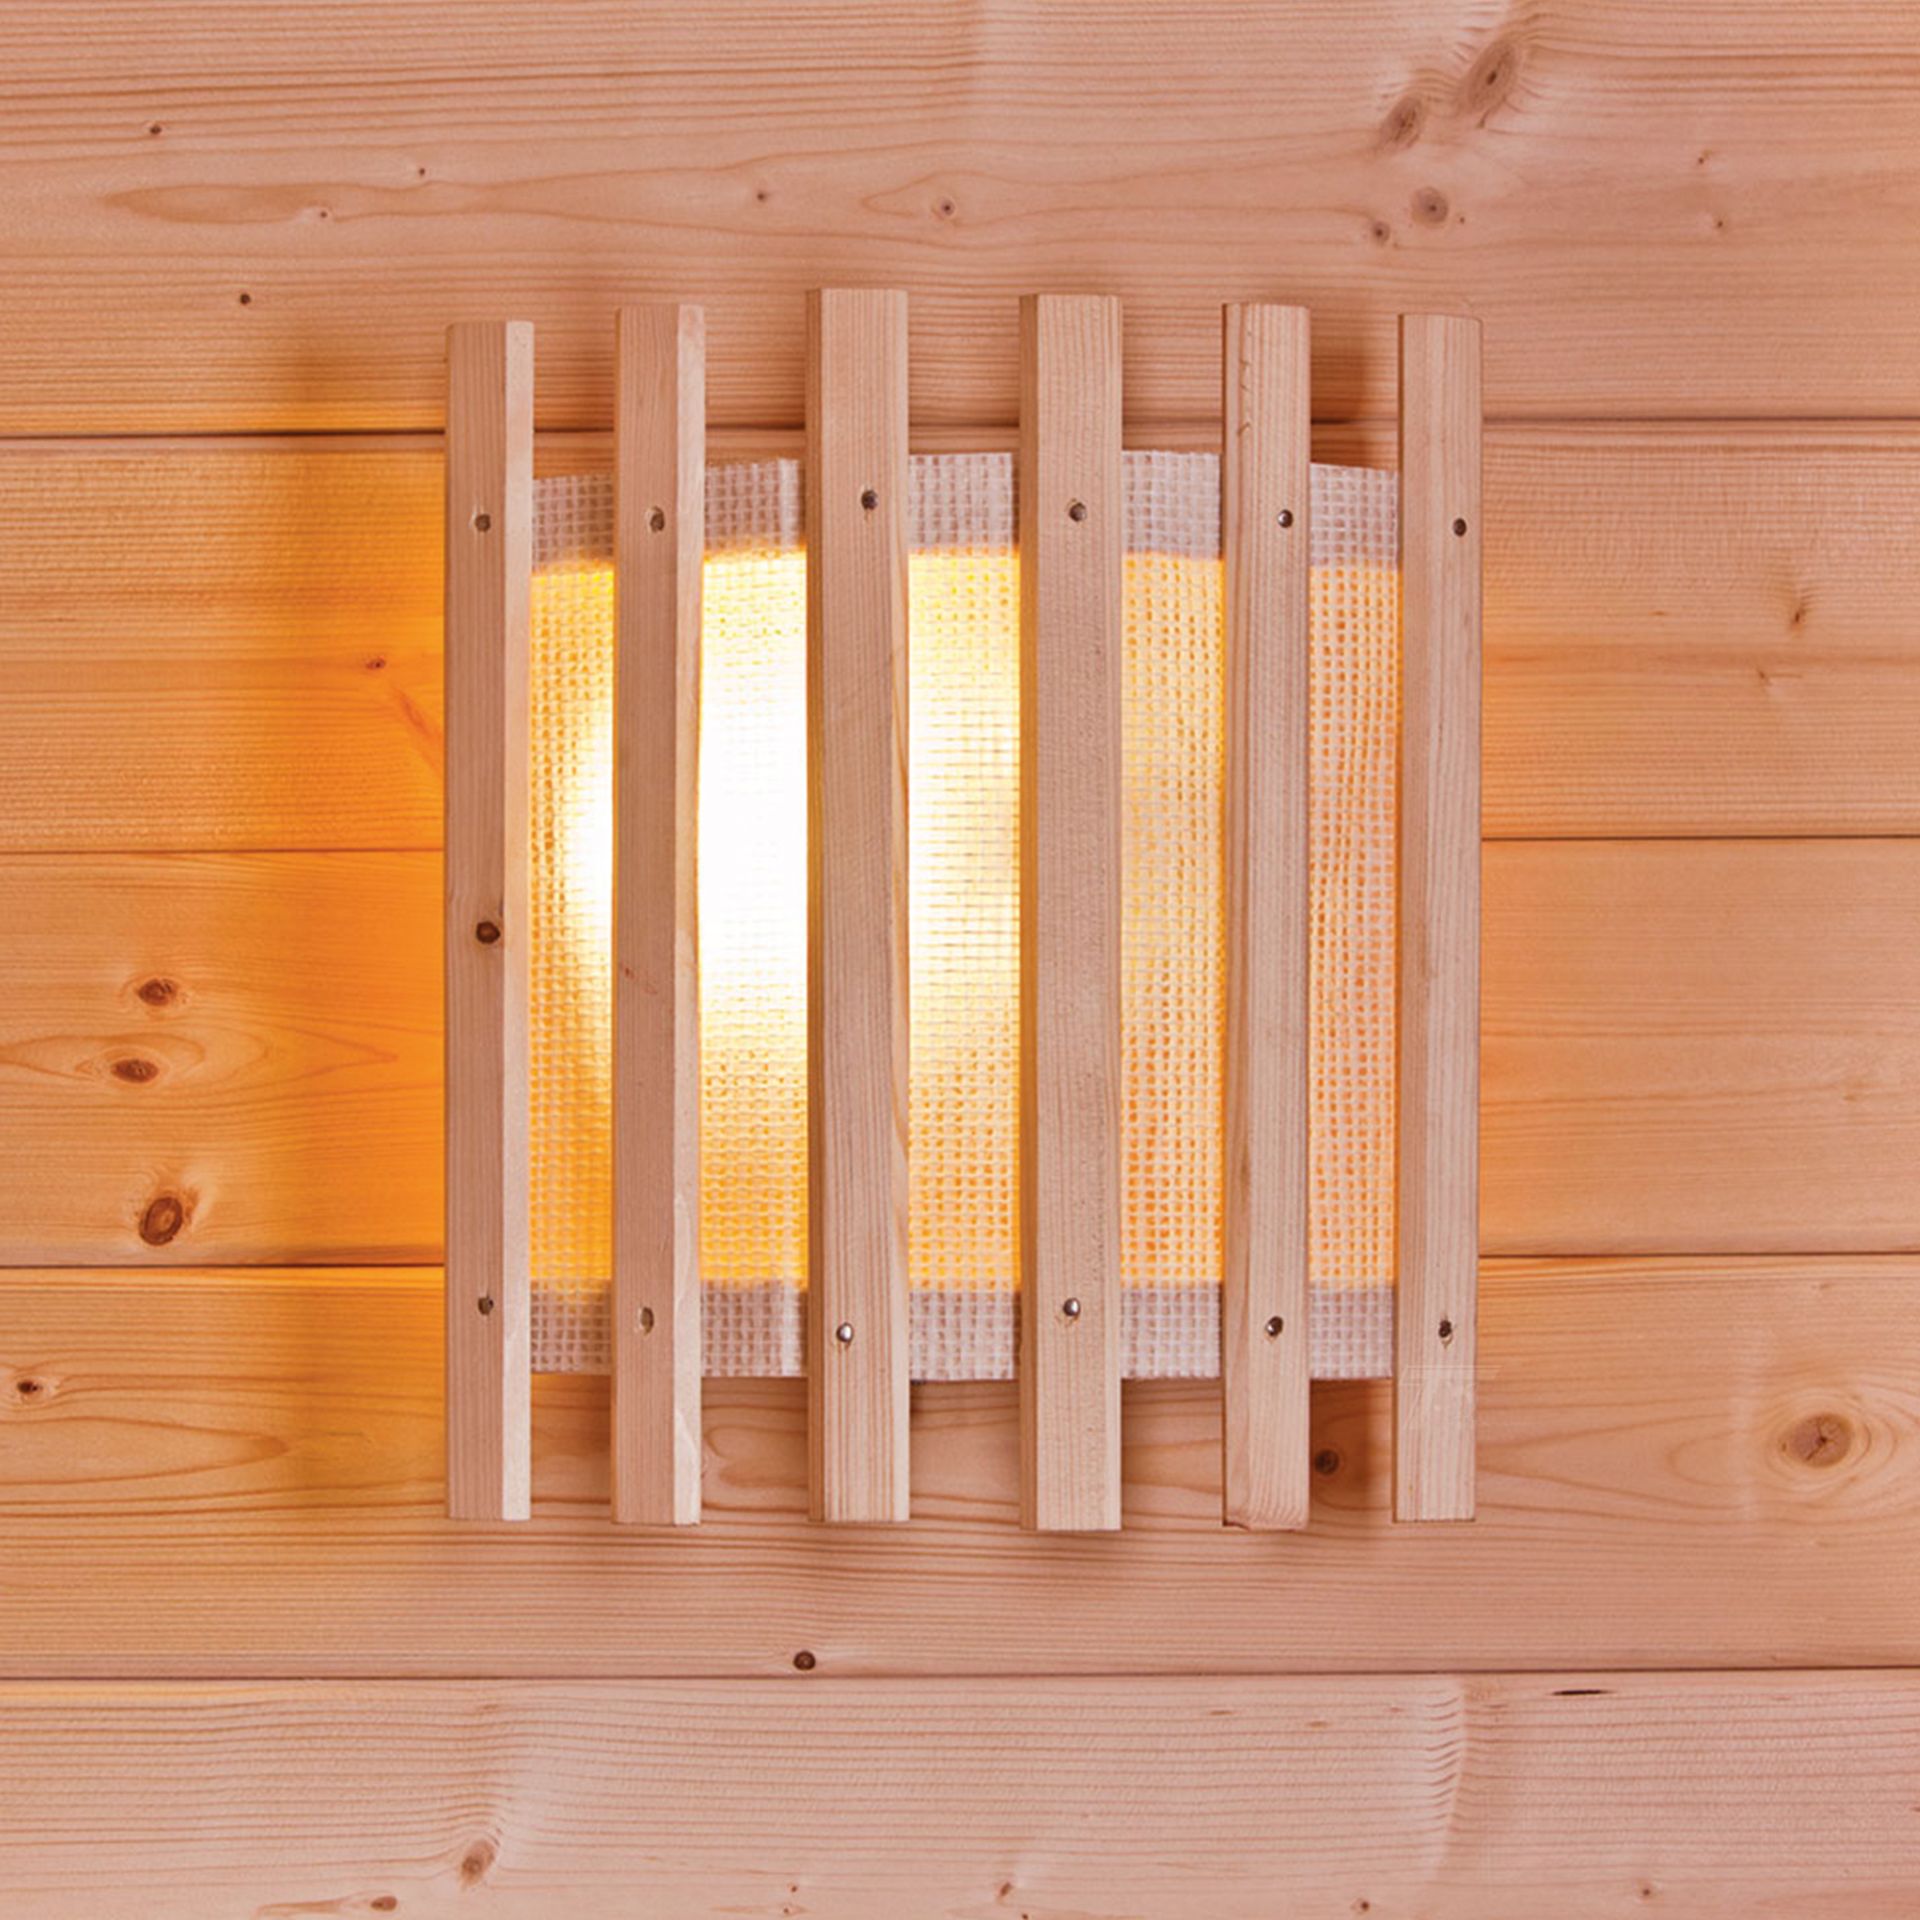 vice versa cijfer Versterker Sauna accessoires - Lamp standaard | De Vliert Sierbestrating